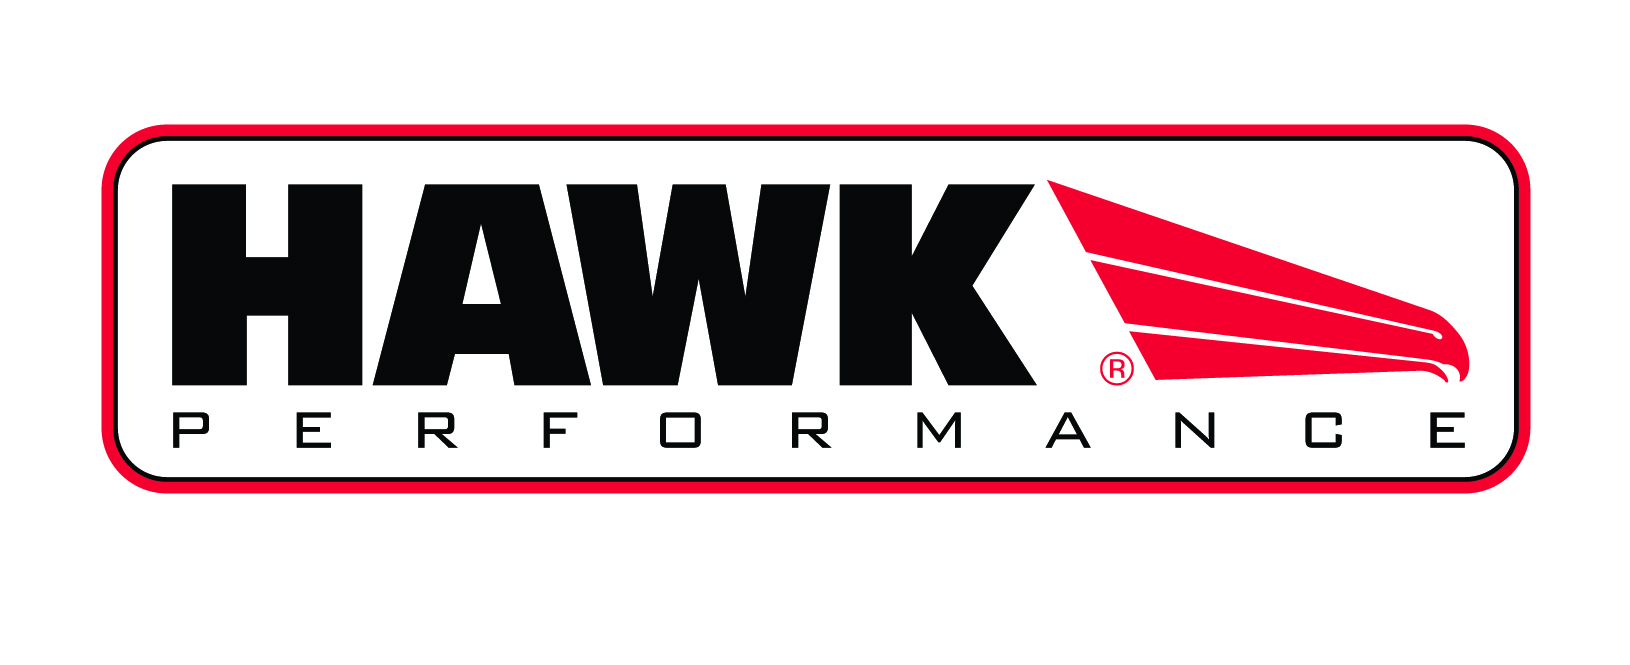 Brzdové kotouče Hawk Performance RAM Trucks